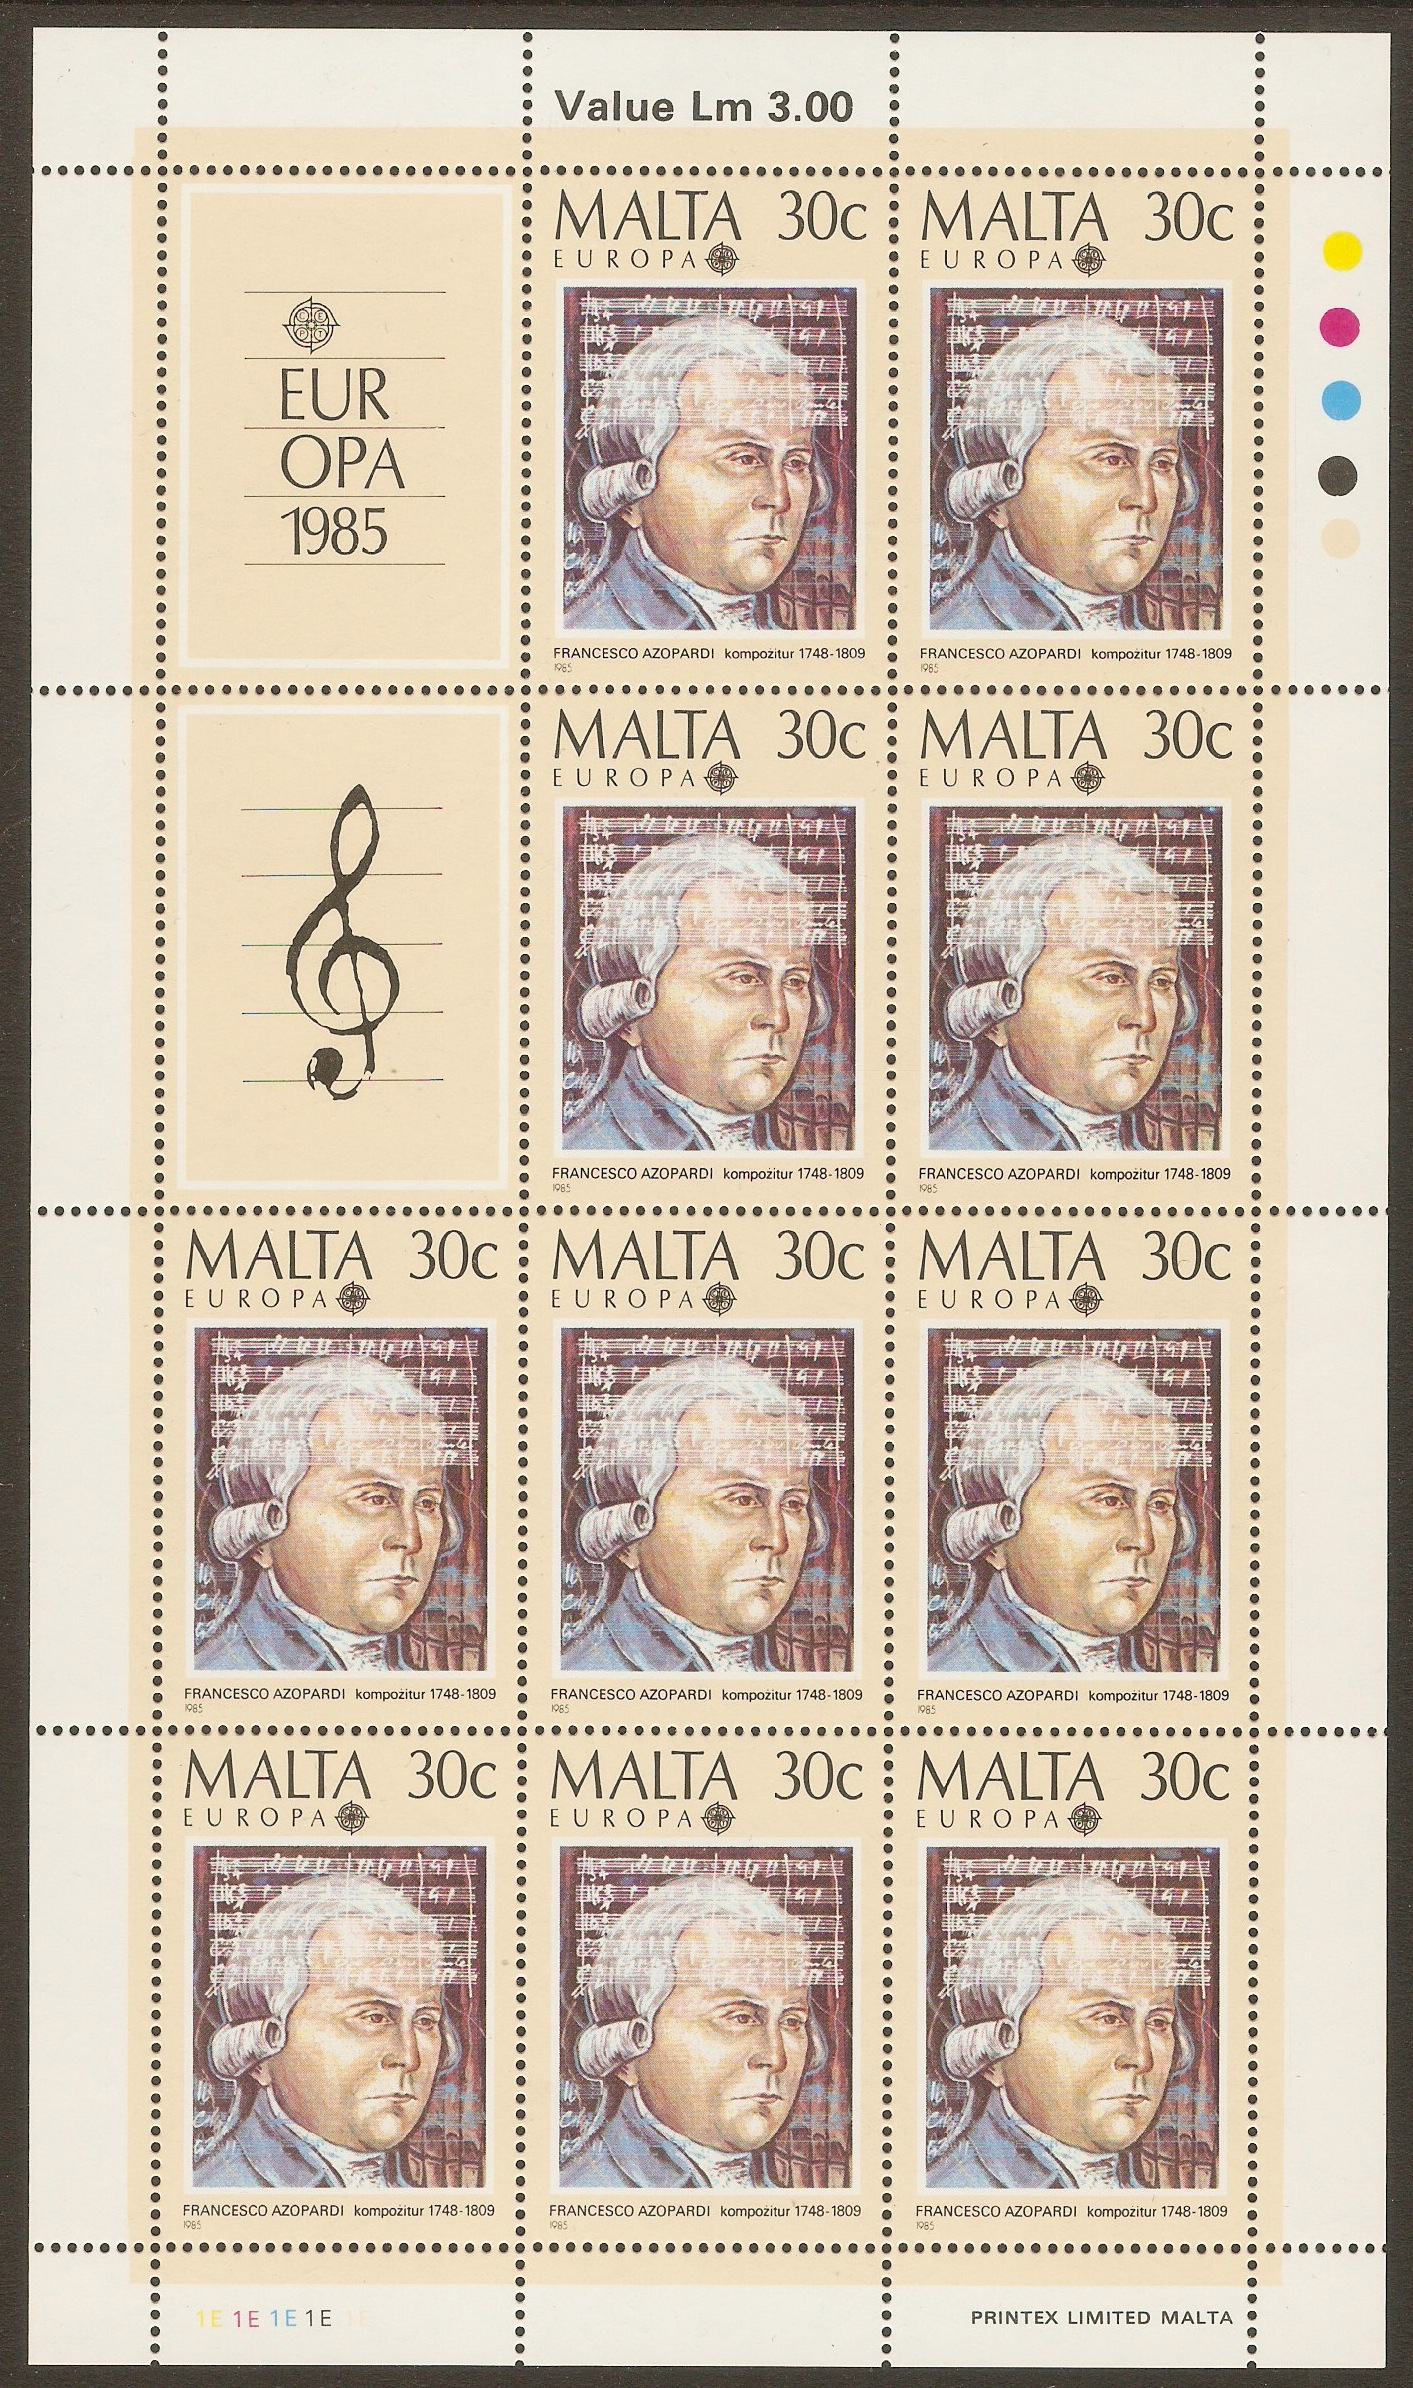 Malta 1984 30c Europa - Music Year stamp. SG759.